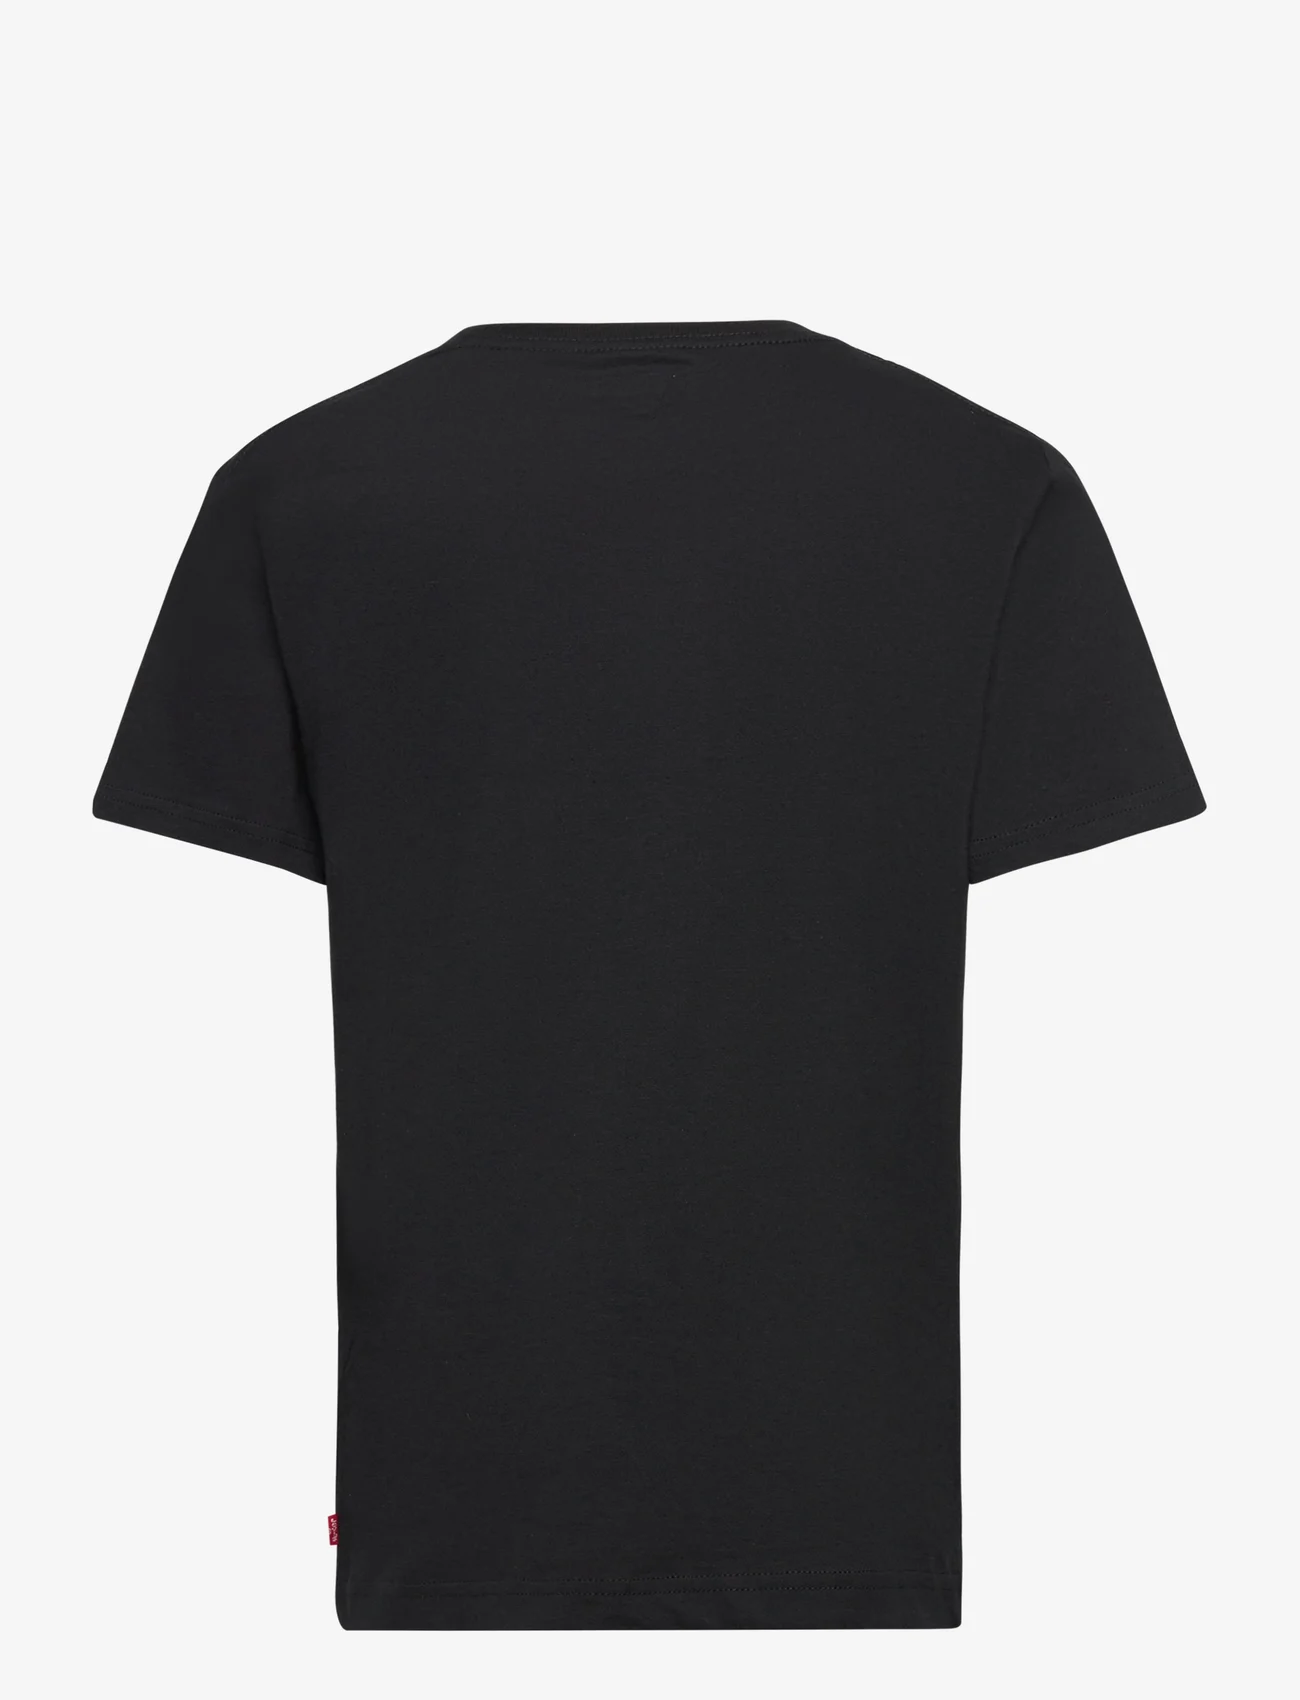 Levi's - Levi's Skater Boy Tee - kortärmade t-shirts - black - 1